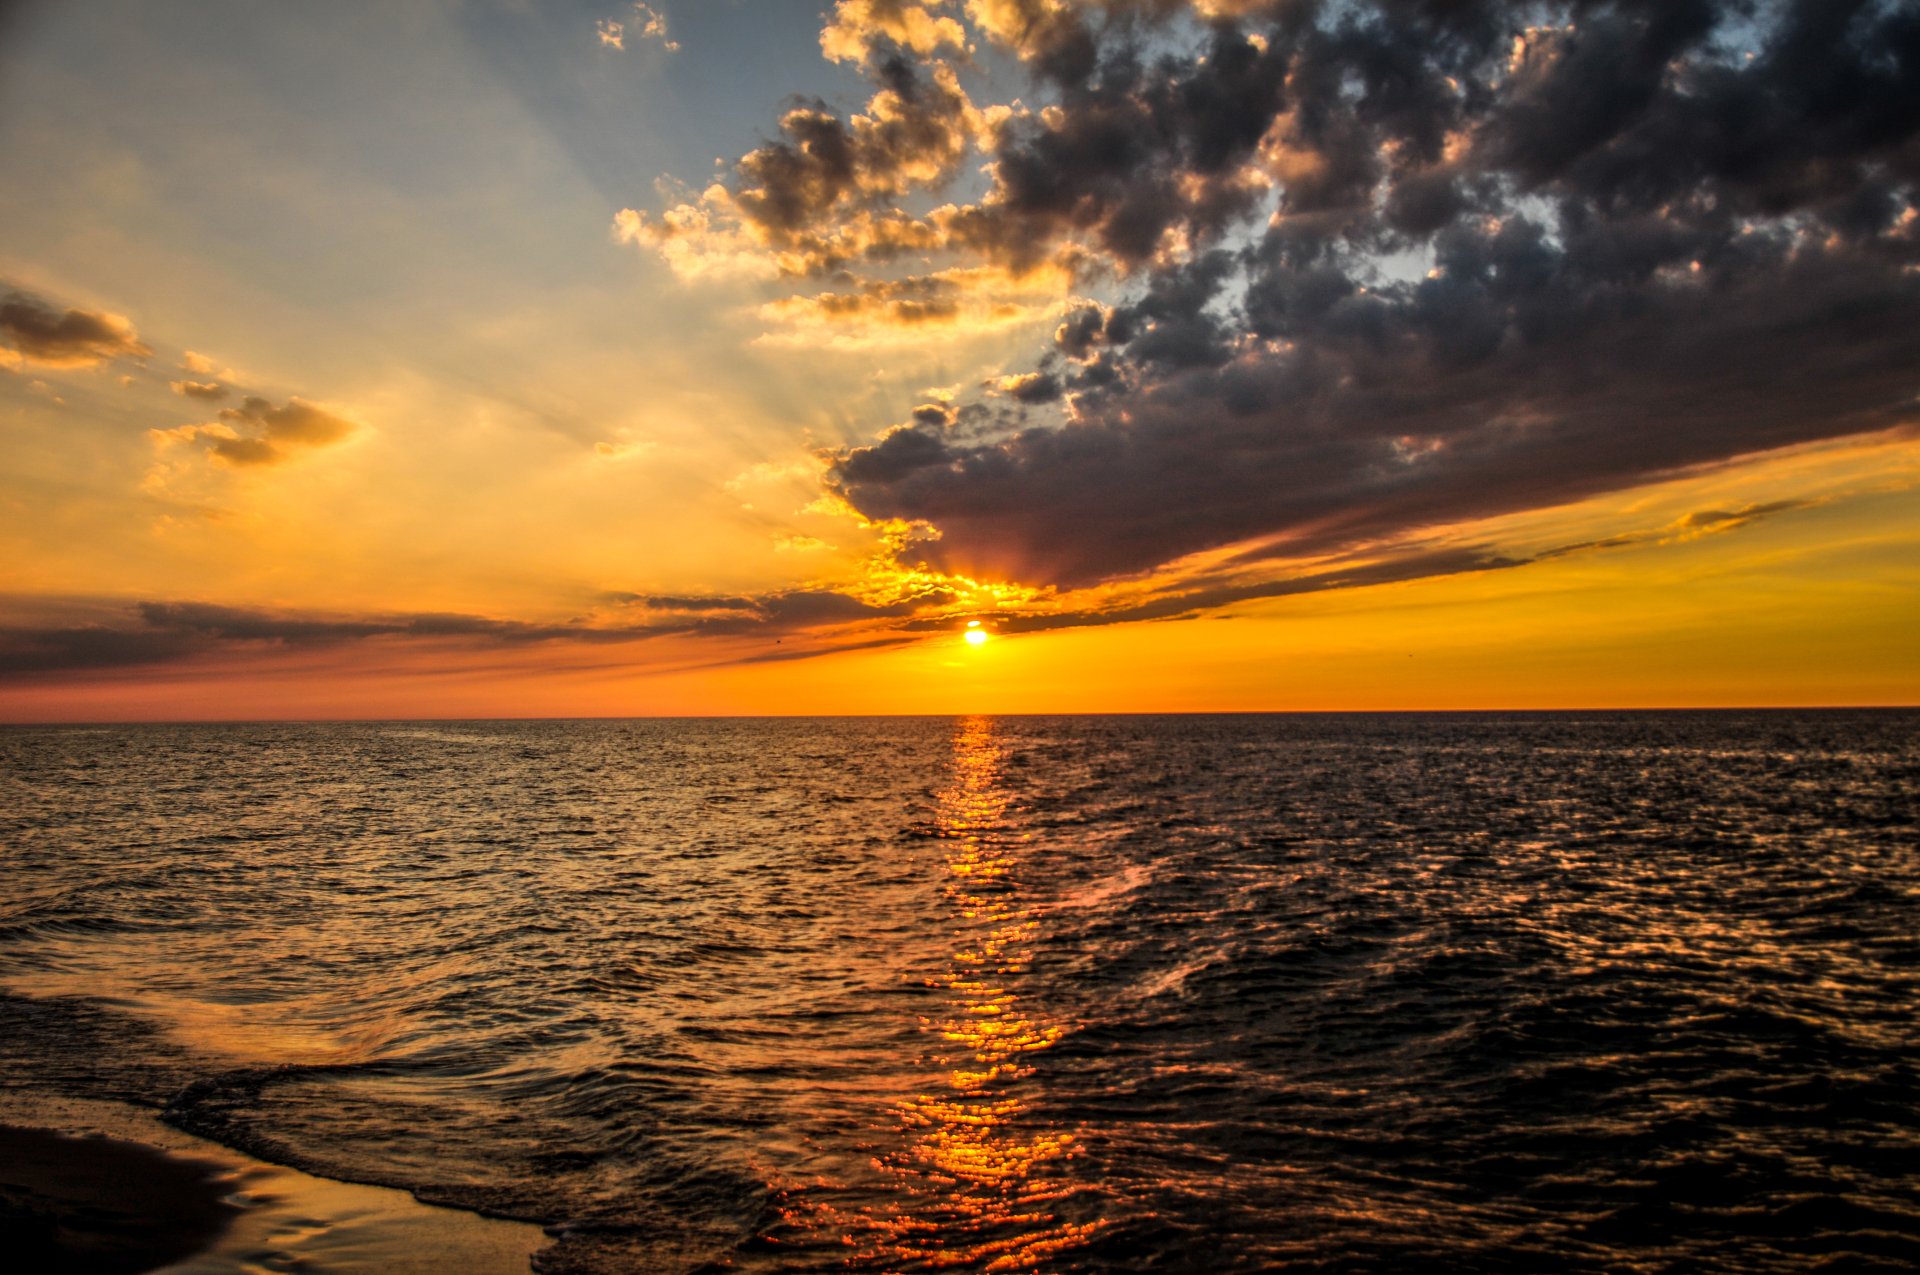 Ocean Sunset By Kamil Porembiński